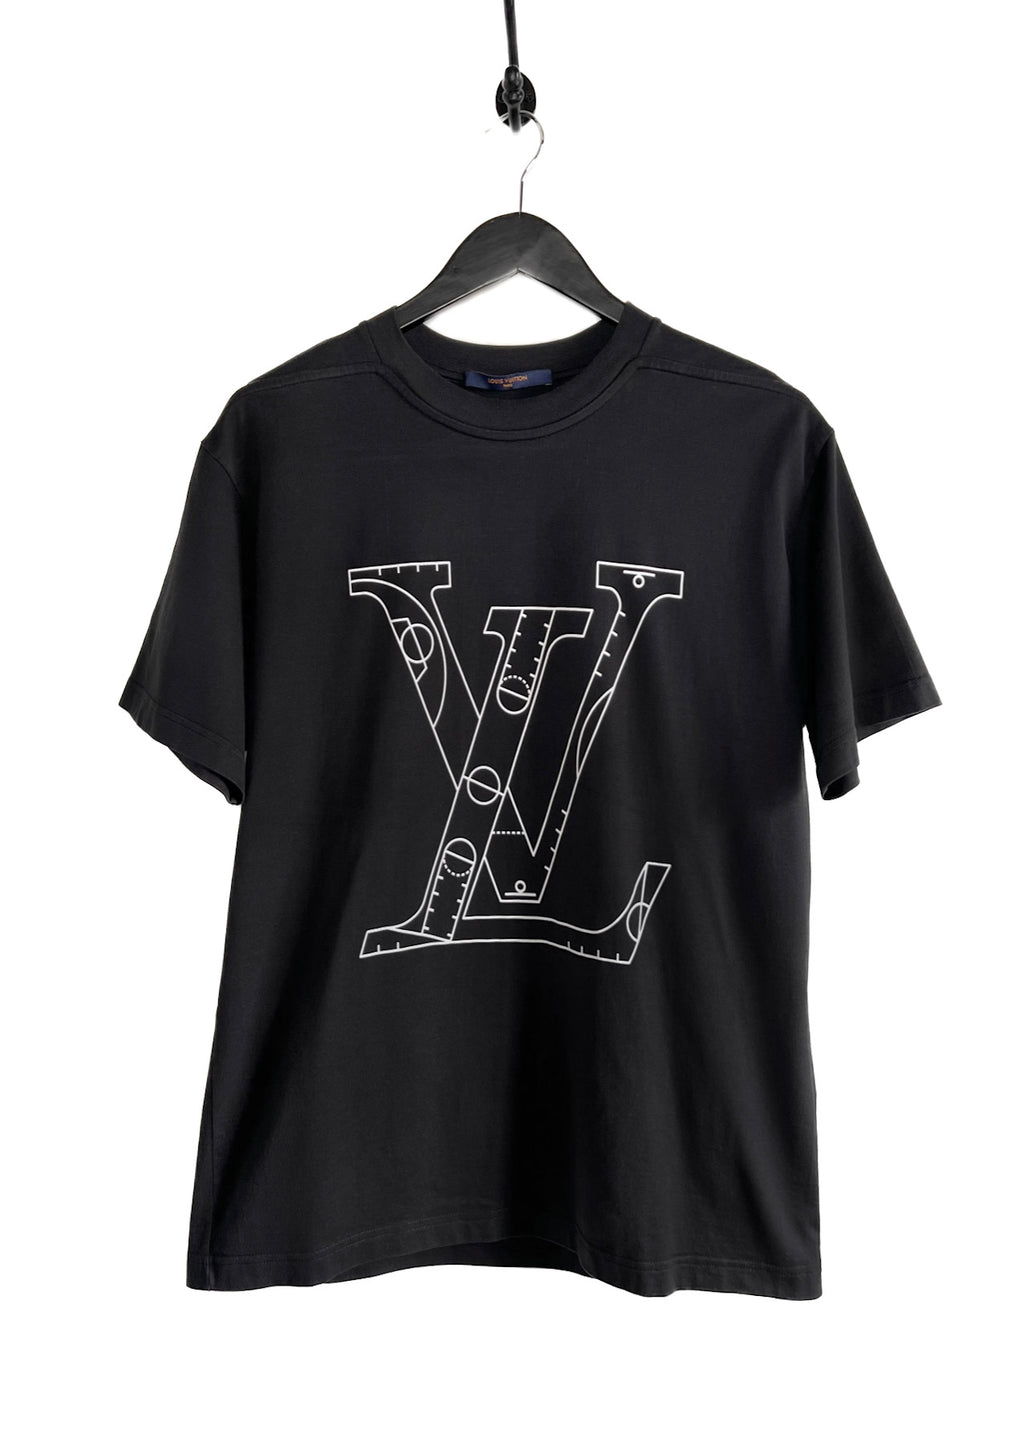 Louis Vuitton White Cotton Logo Printed NBA Short Sleeve T-Shirt S